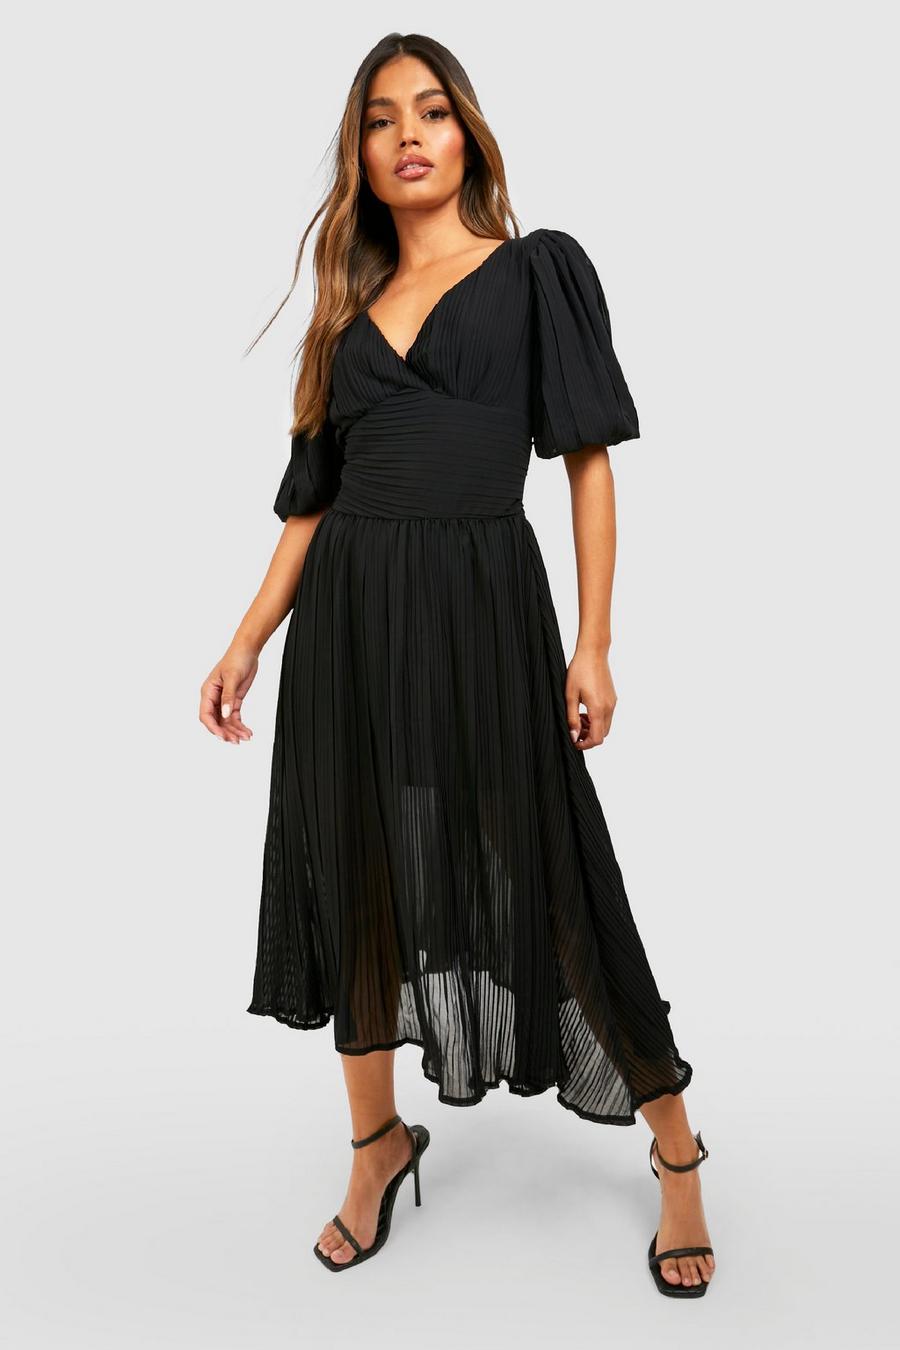 Black שמלת מידי עם מחשוף עמוק בגב, שרוולים תפוחים וקפלים image number 1